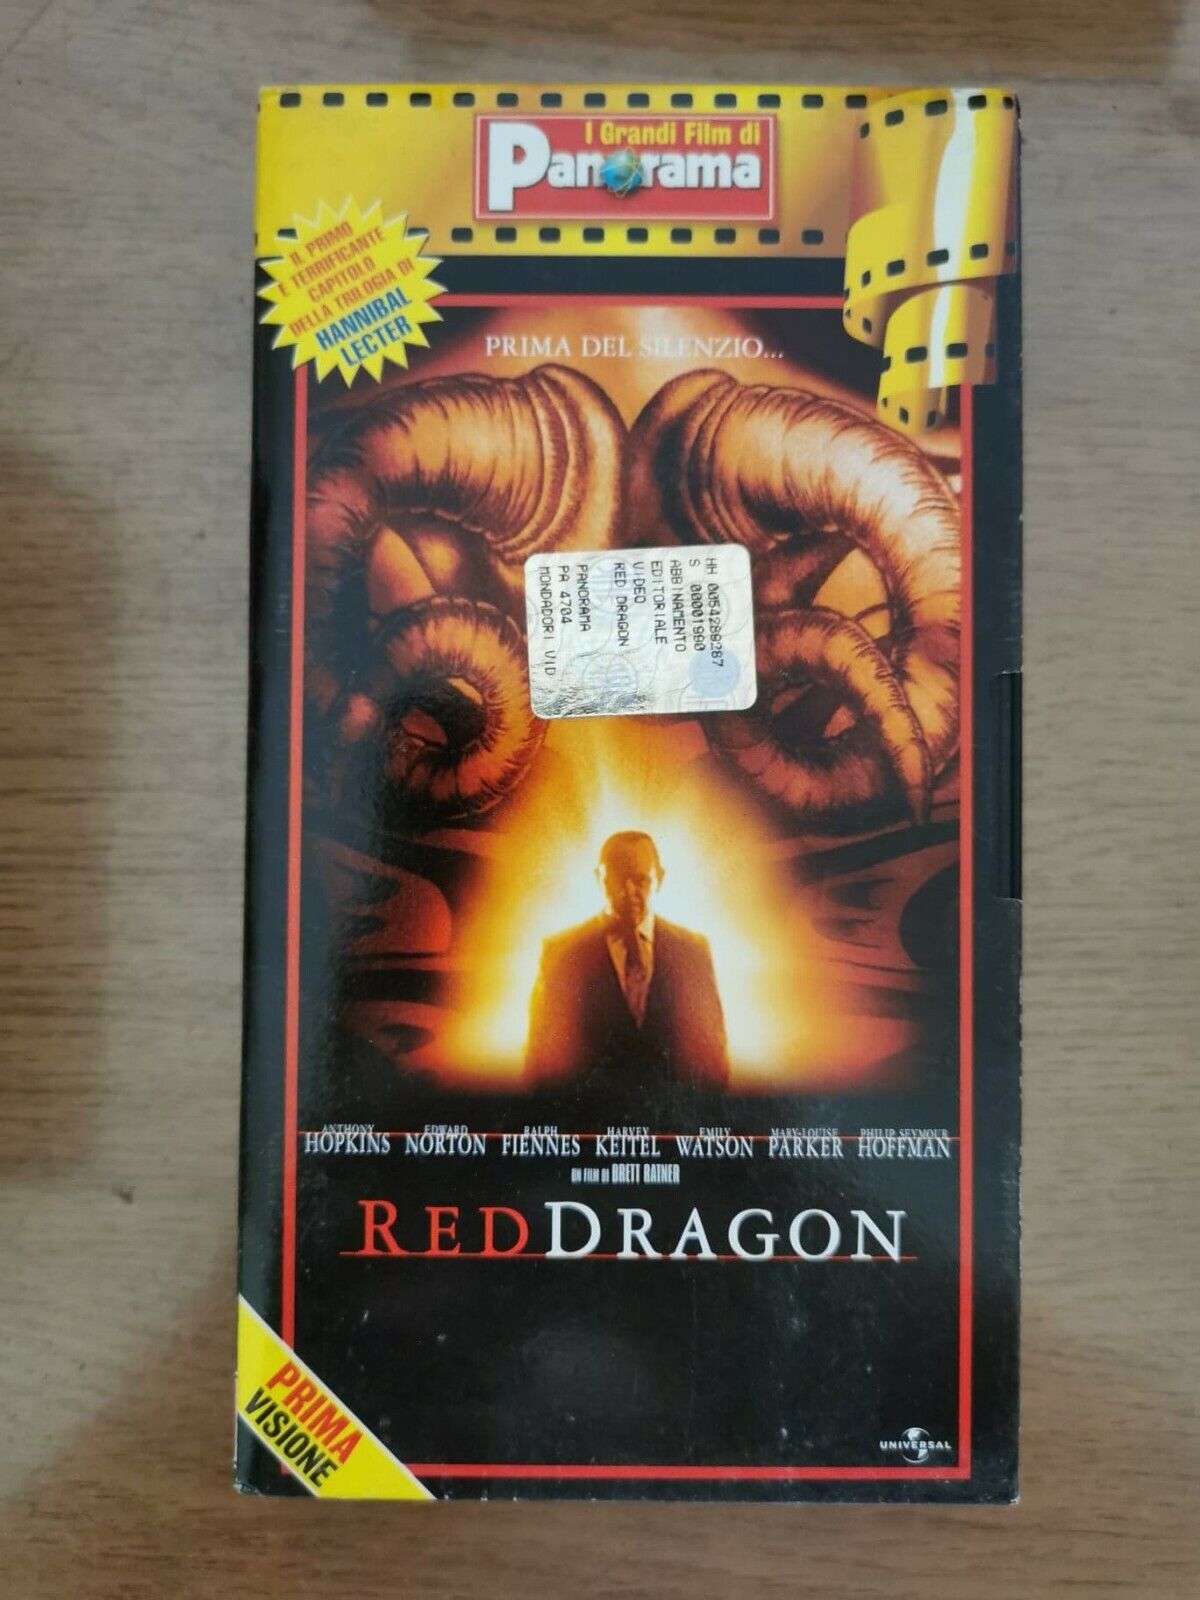 Red dragon - B. Ratner - Panorama - 2002 - VHS - AR vhs usato